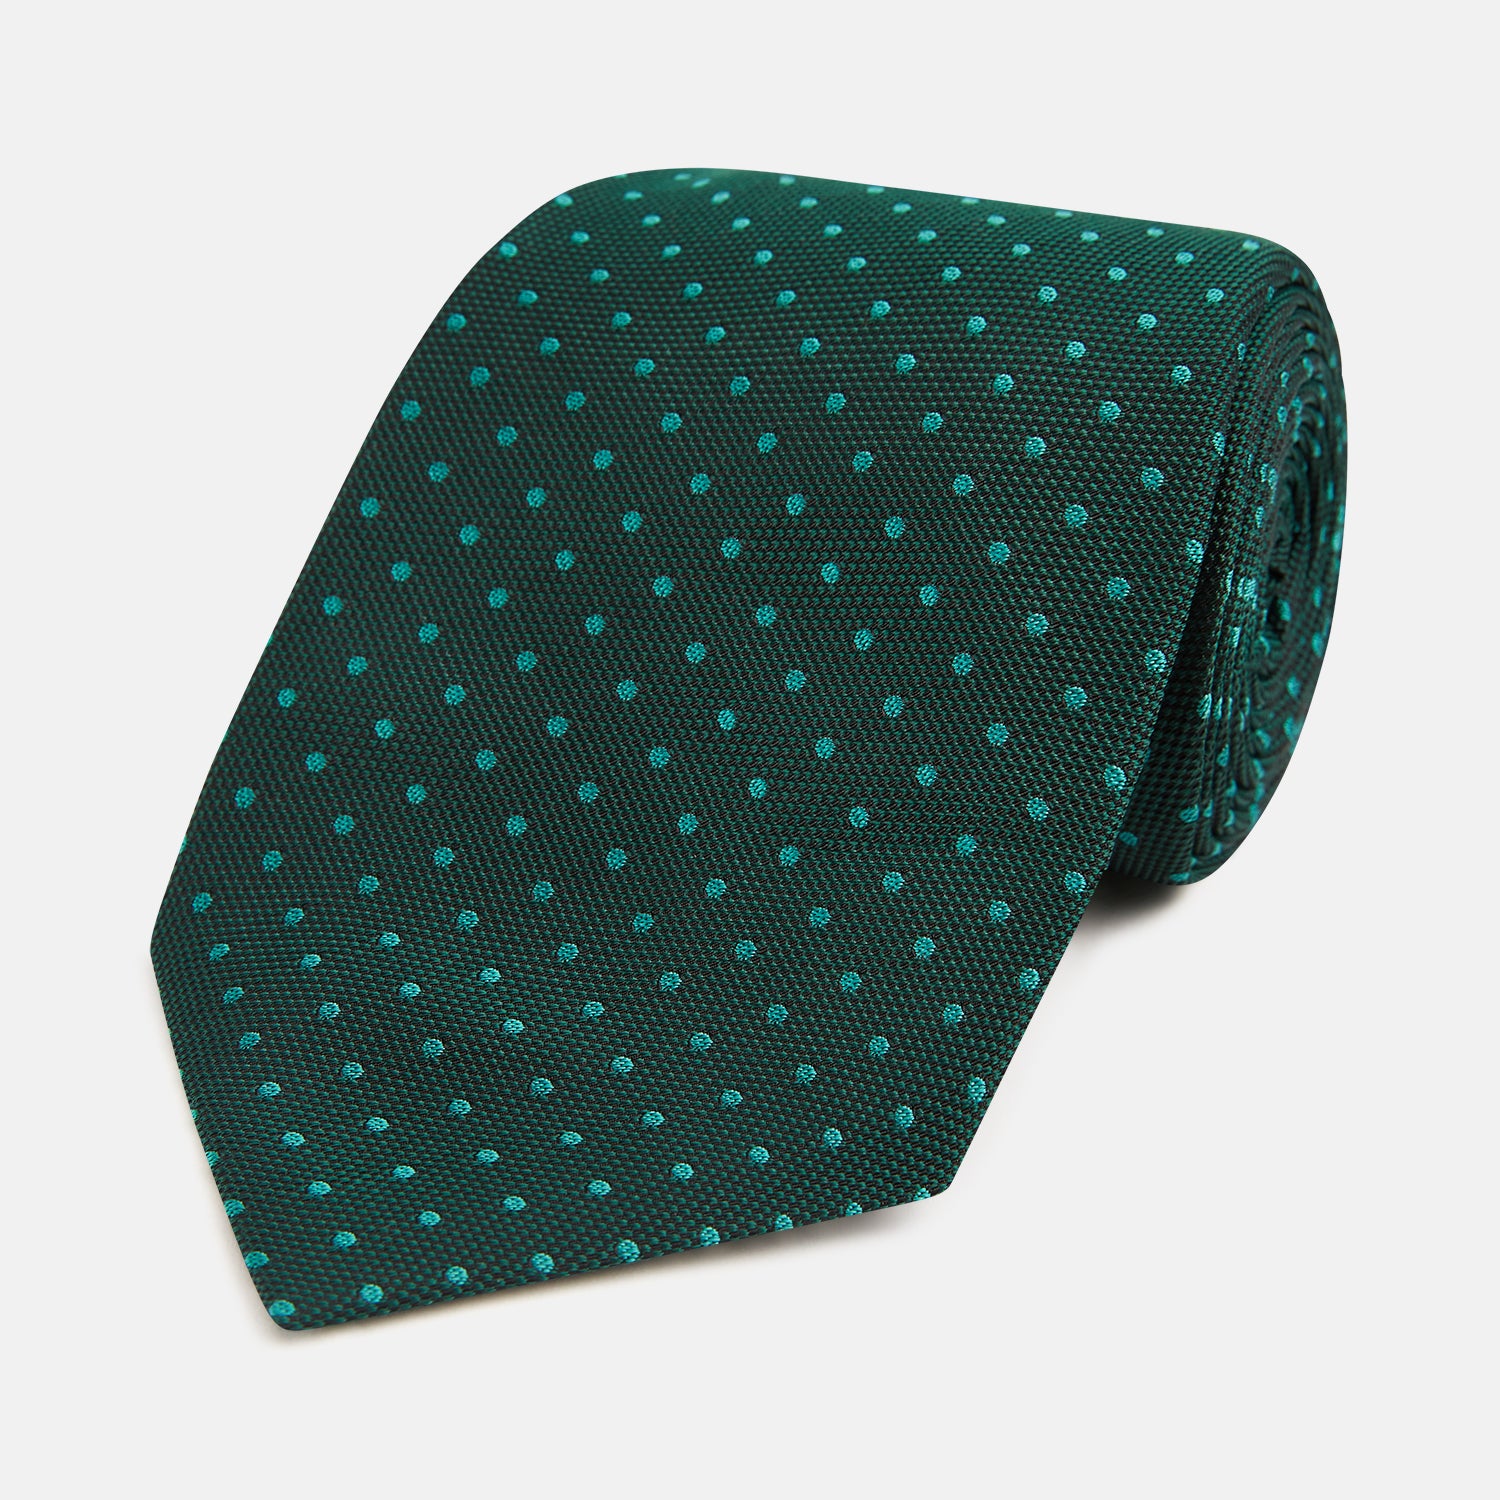 Dark Green Micro Dot Silk Tie